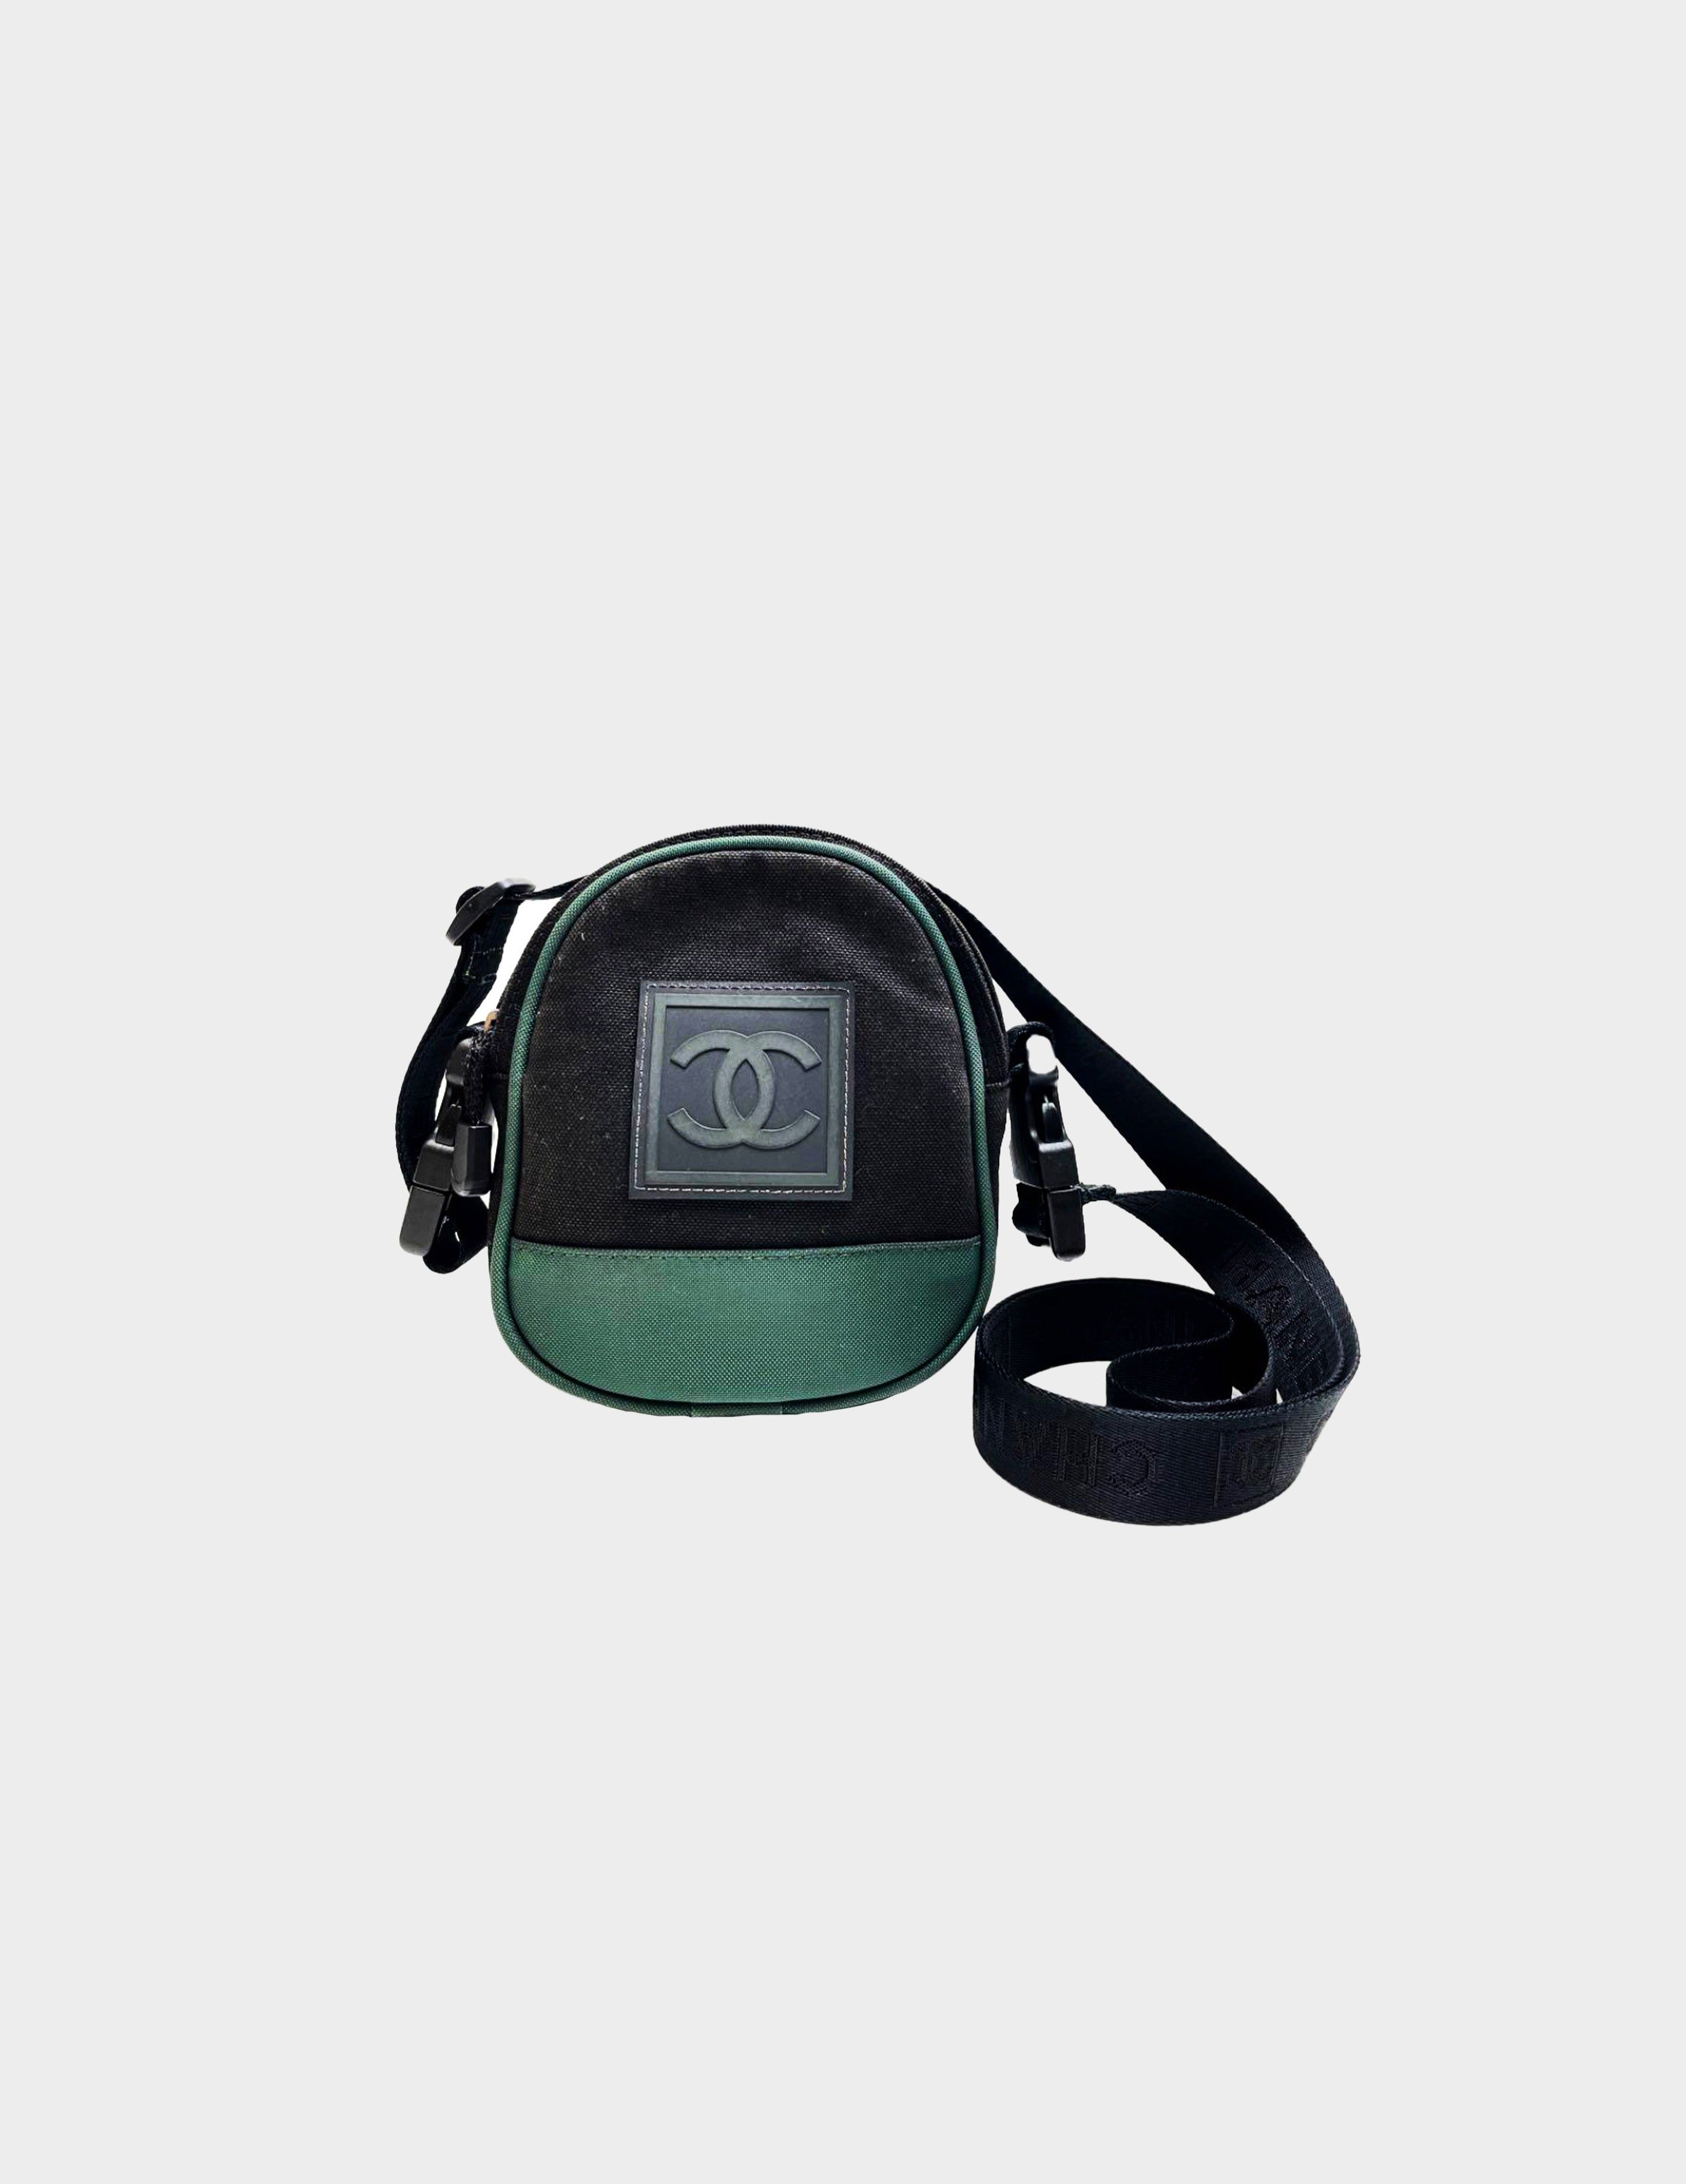 Chanel 2003 Sports Line Green Nylon Bag · INTO